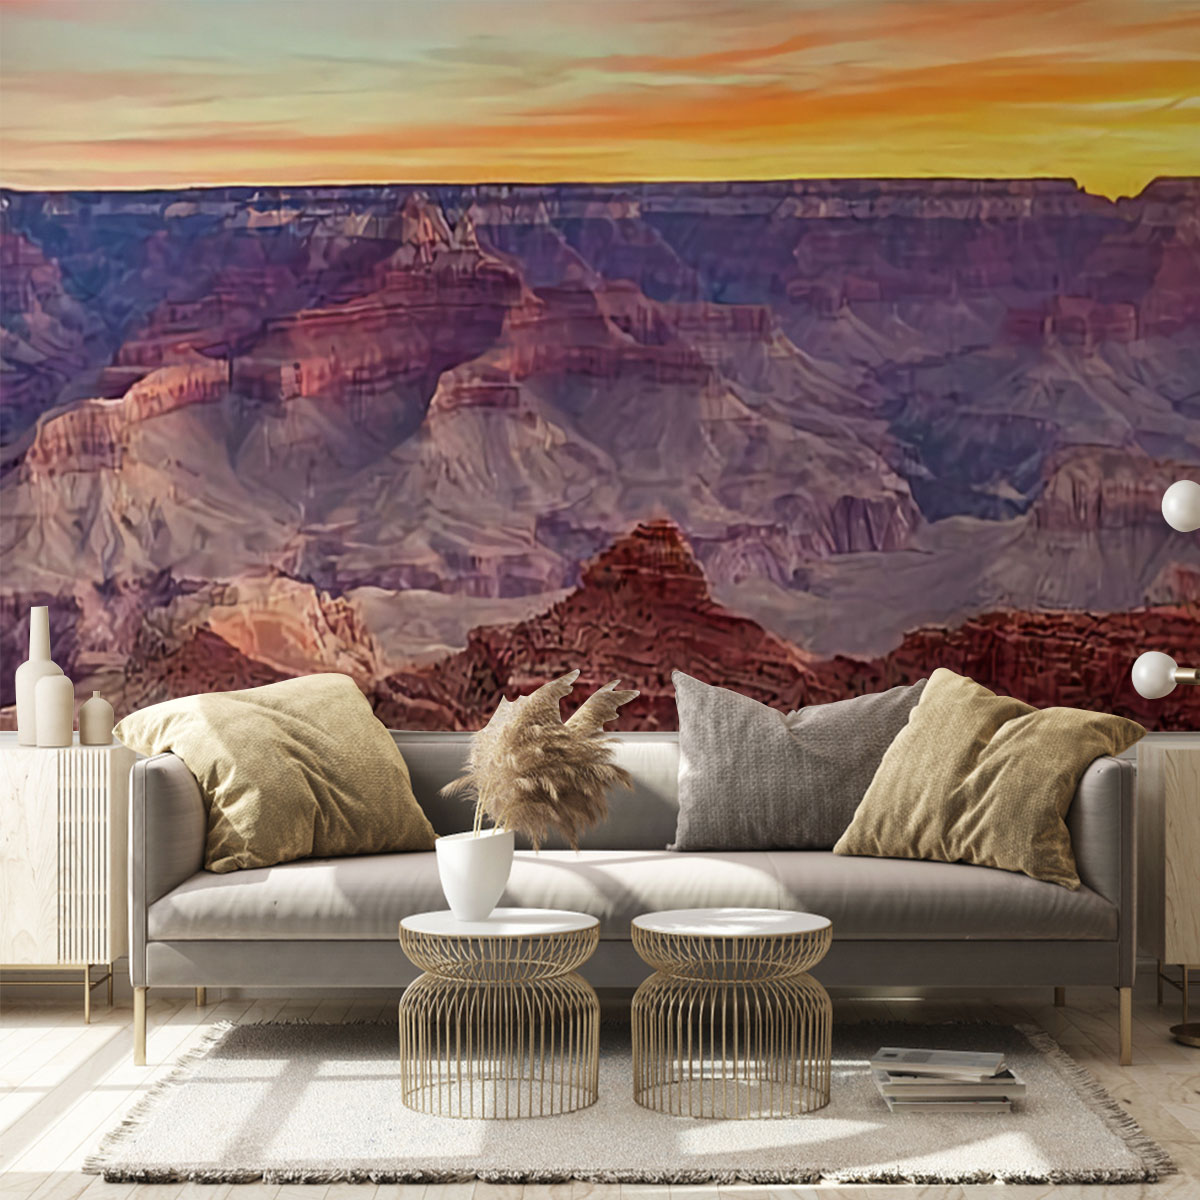 Sunrise Sky at Grand Canyon Wall Mural